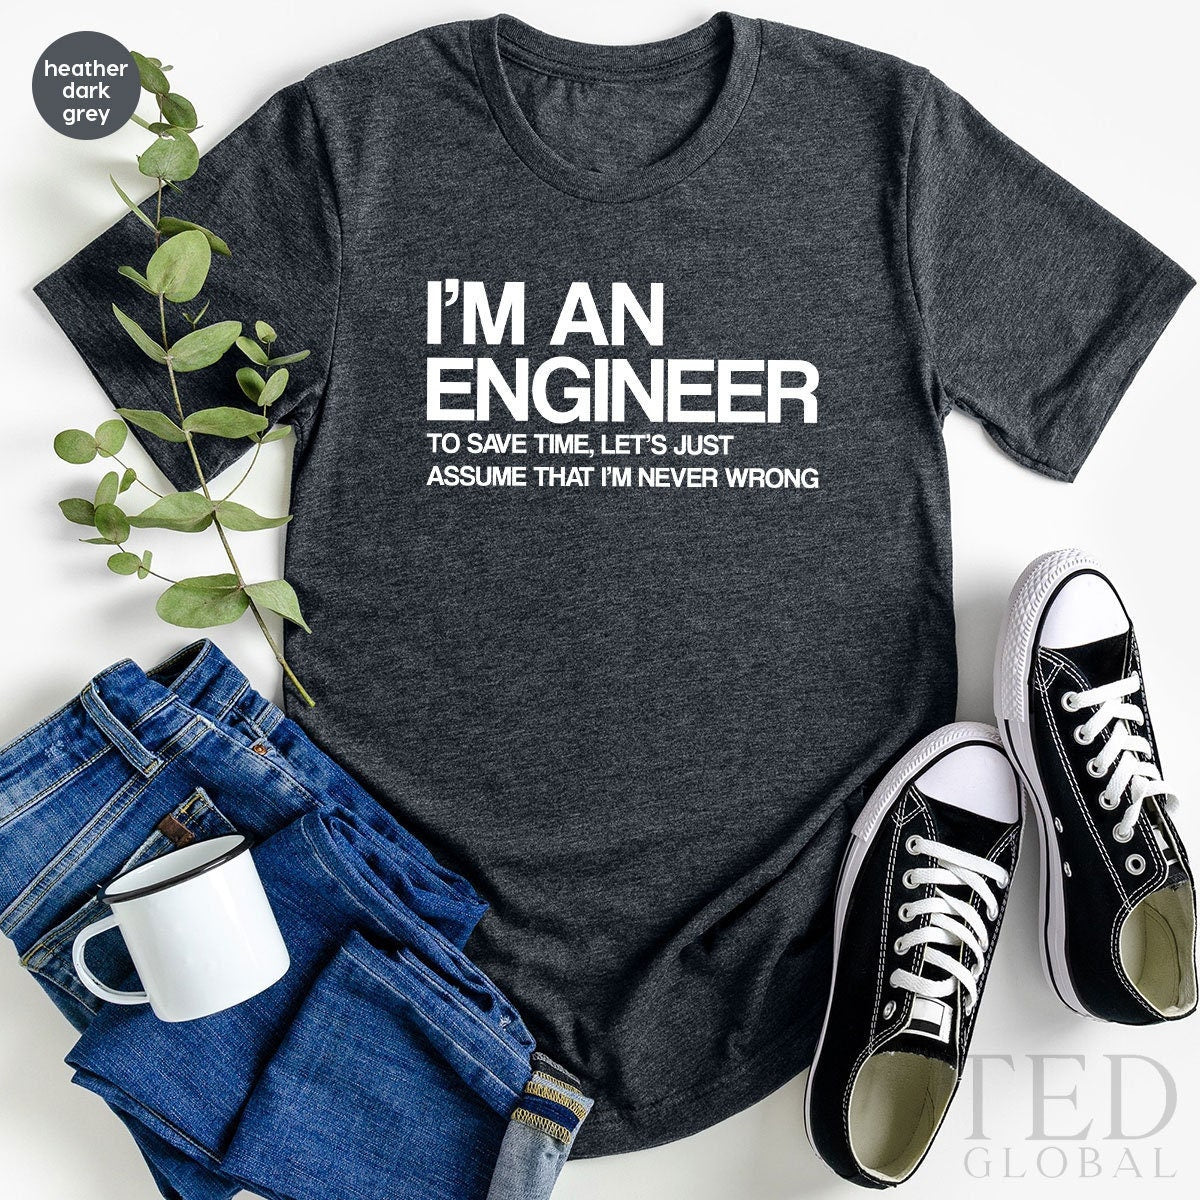 Engineer Shirt, Graduating Gift Engineering, Engineer Gifts, Engineering Shirt, Funny Engineer Gift, Engineer Student Gift, Engineer Teacher - Fastdeliverytees.com